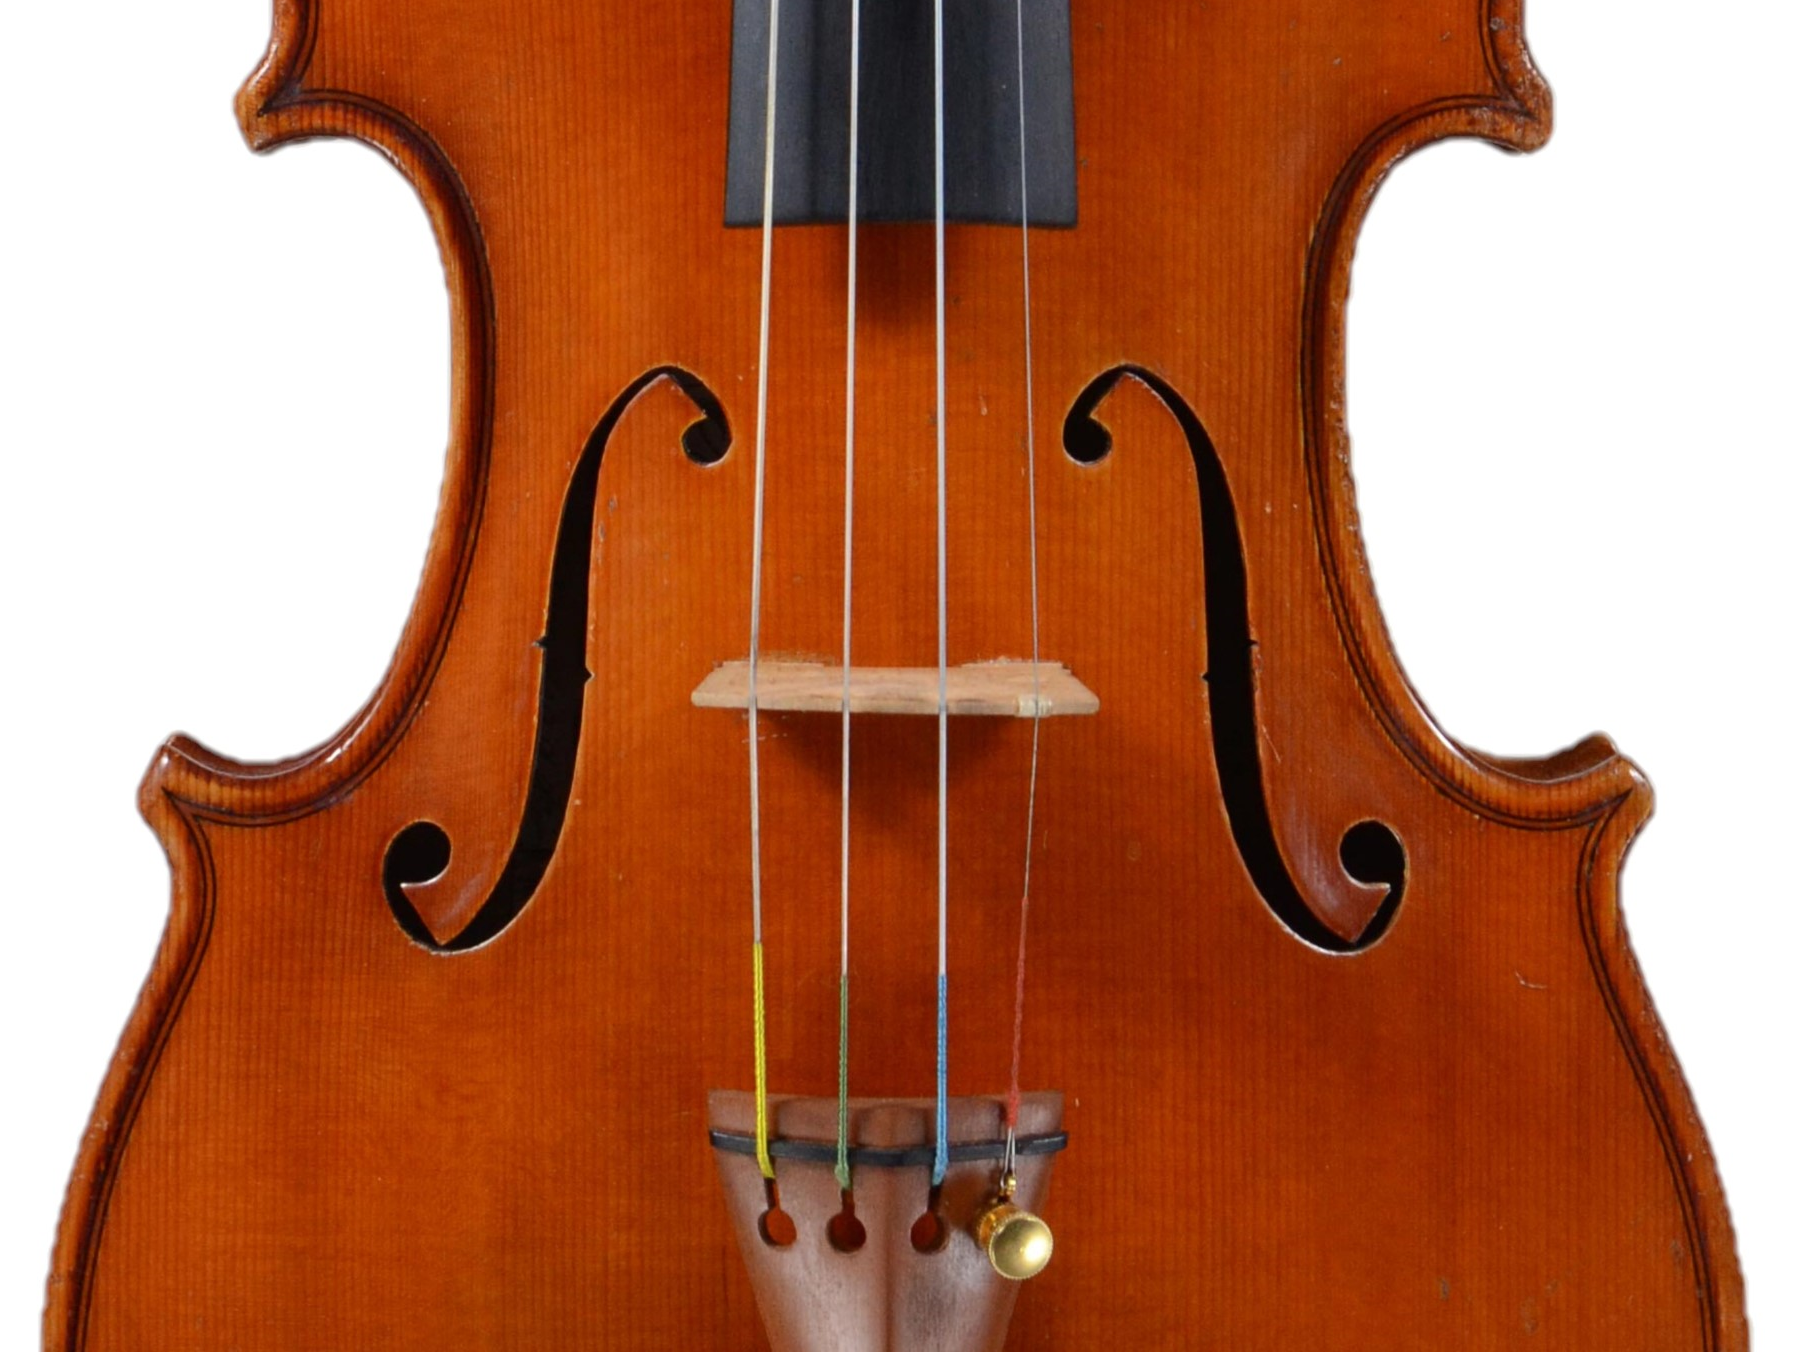 Mario Gadda 1980 スカランペラモデル ヴァイオリン - 弦楽器